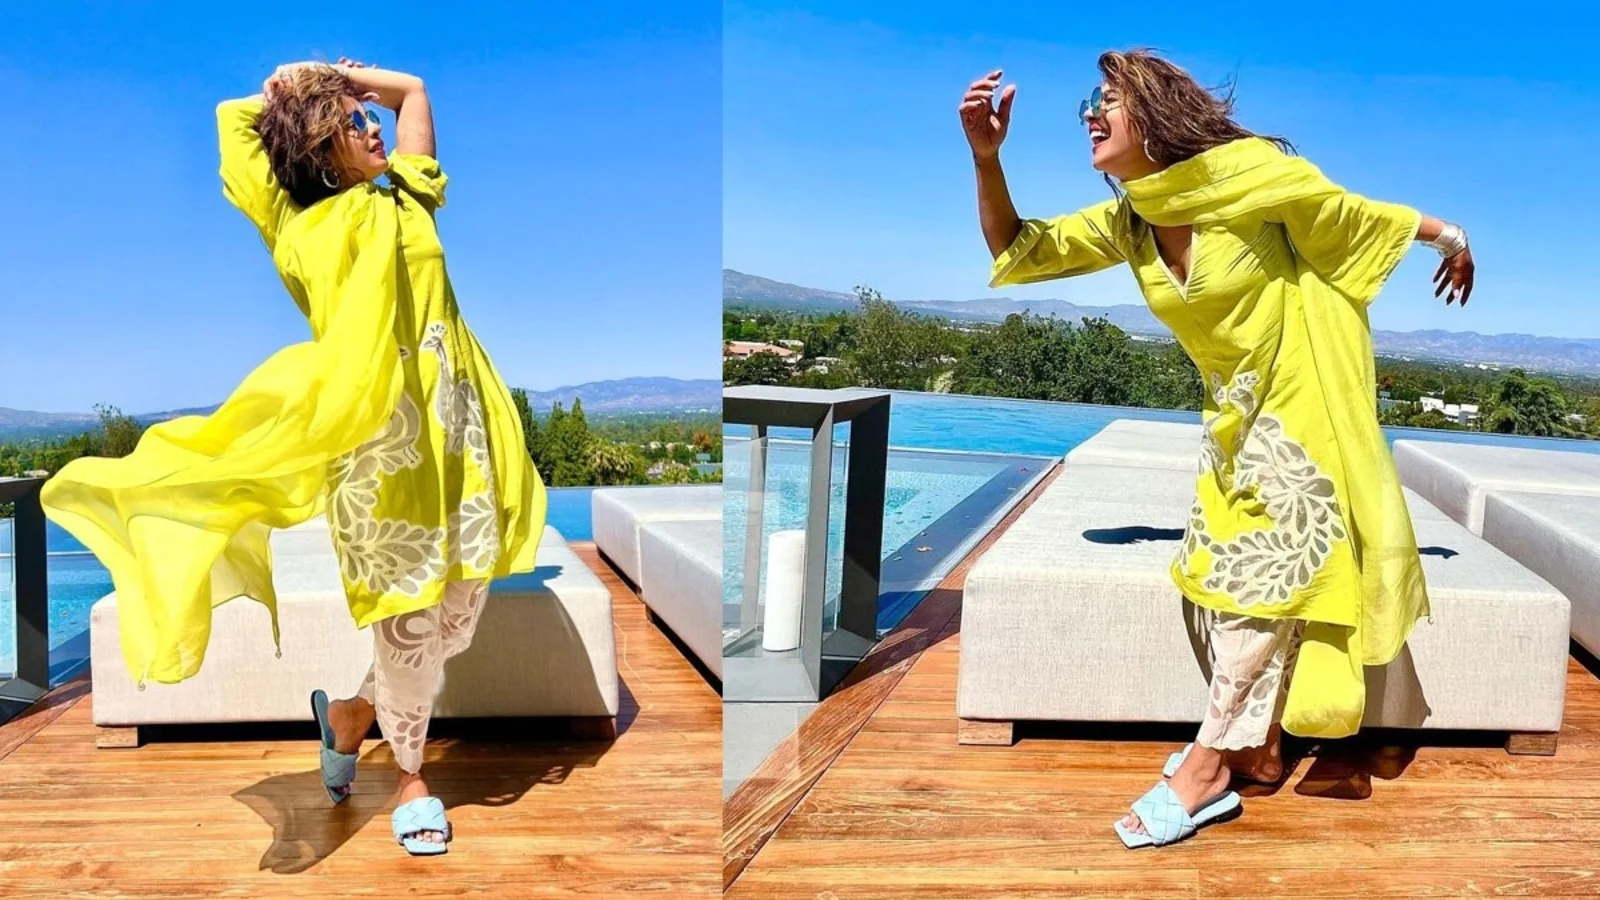 Priyanka Chopra gets goofy in kurta-salwar, strikes funny poses as she soaks some sun by the poolside. See pics